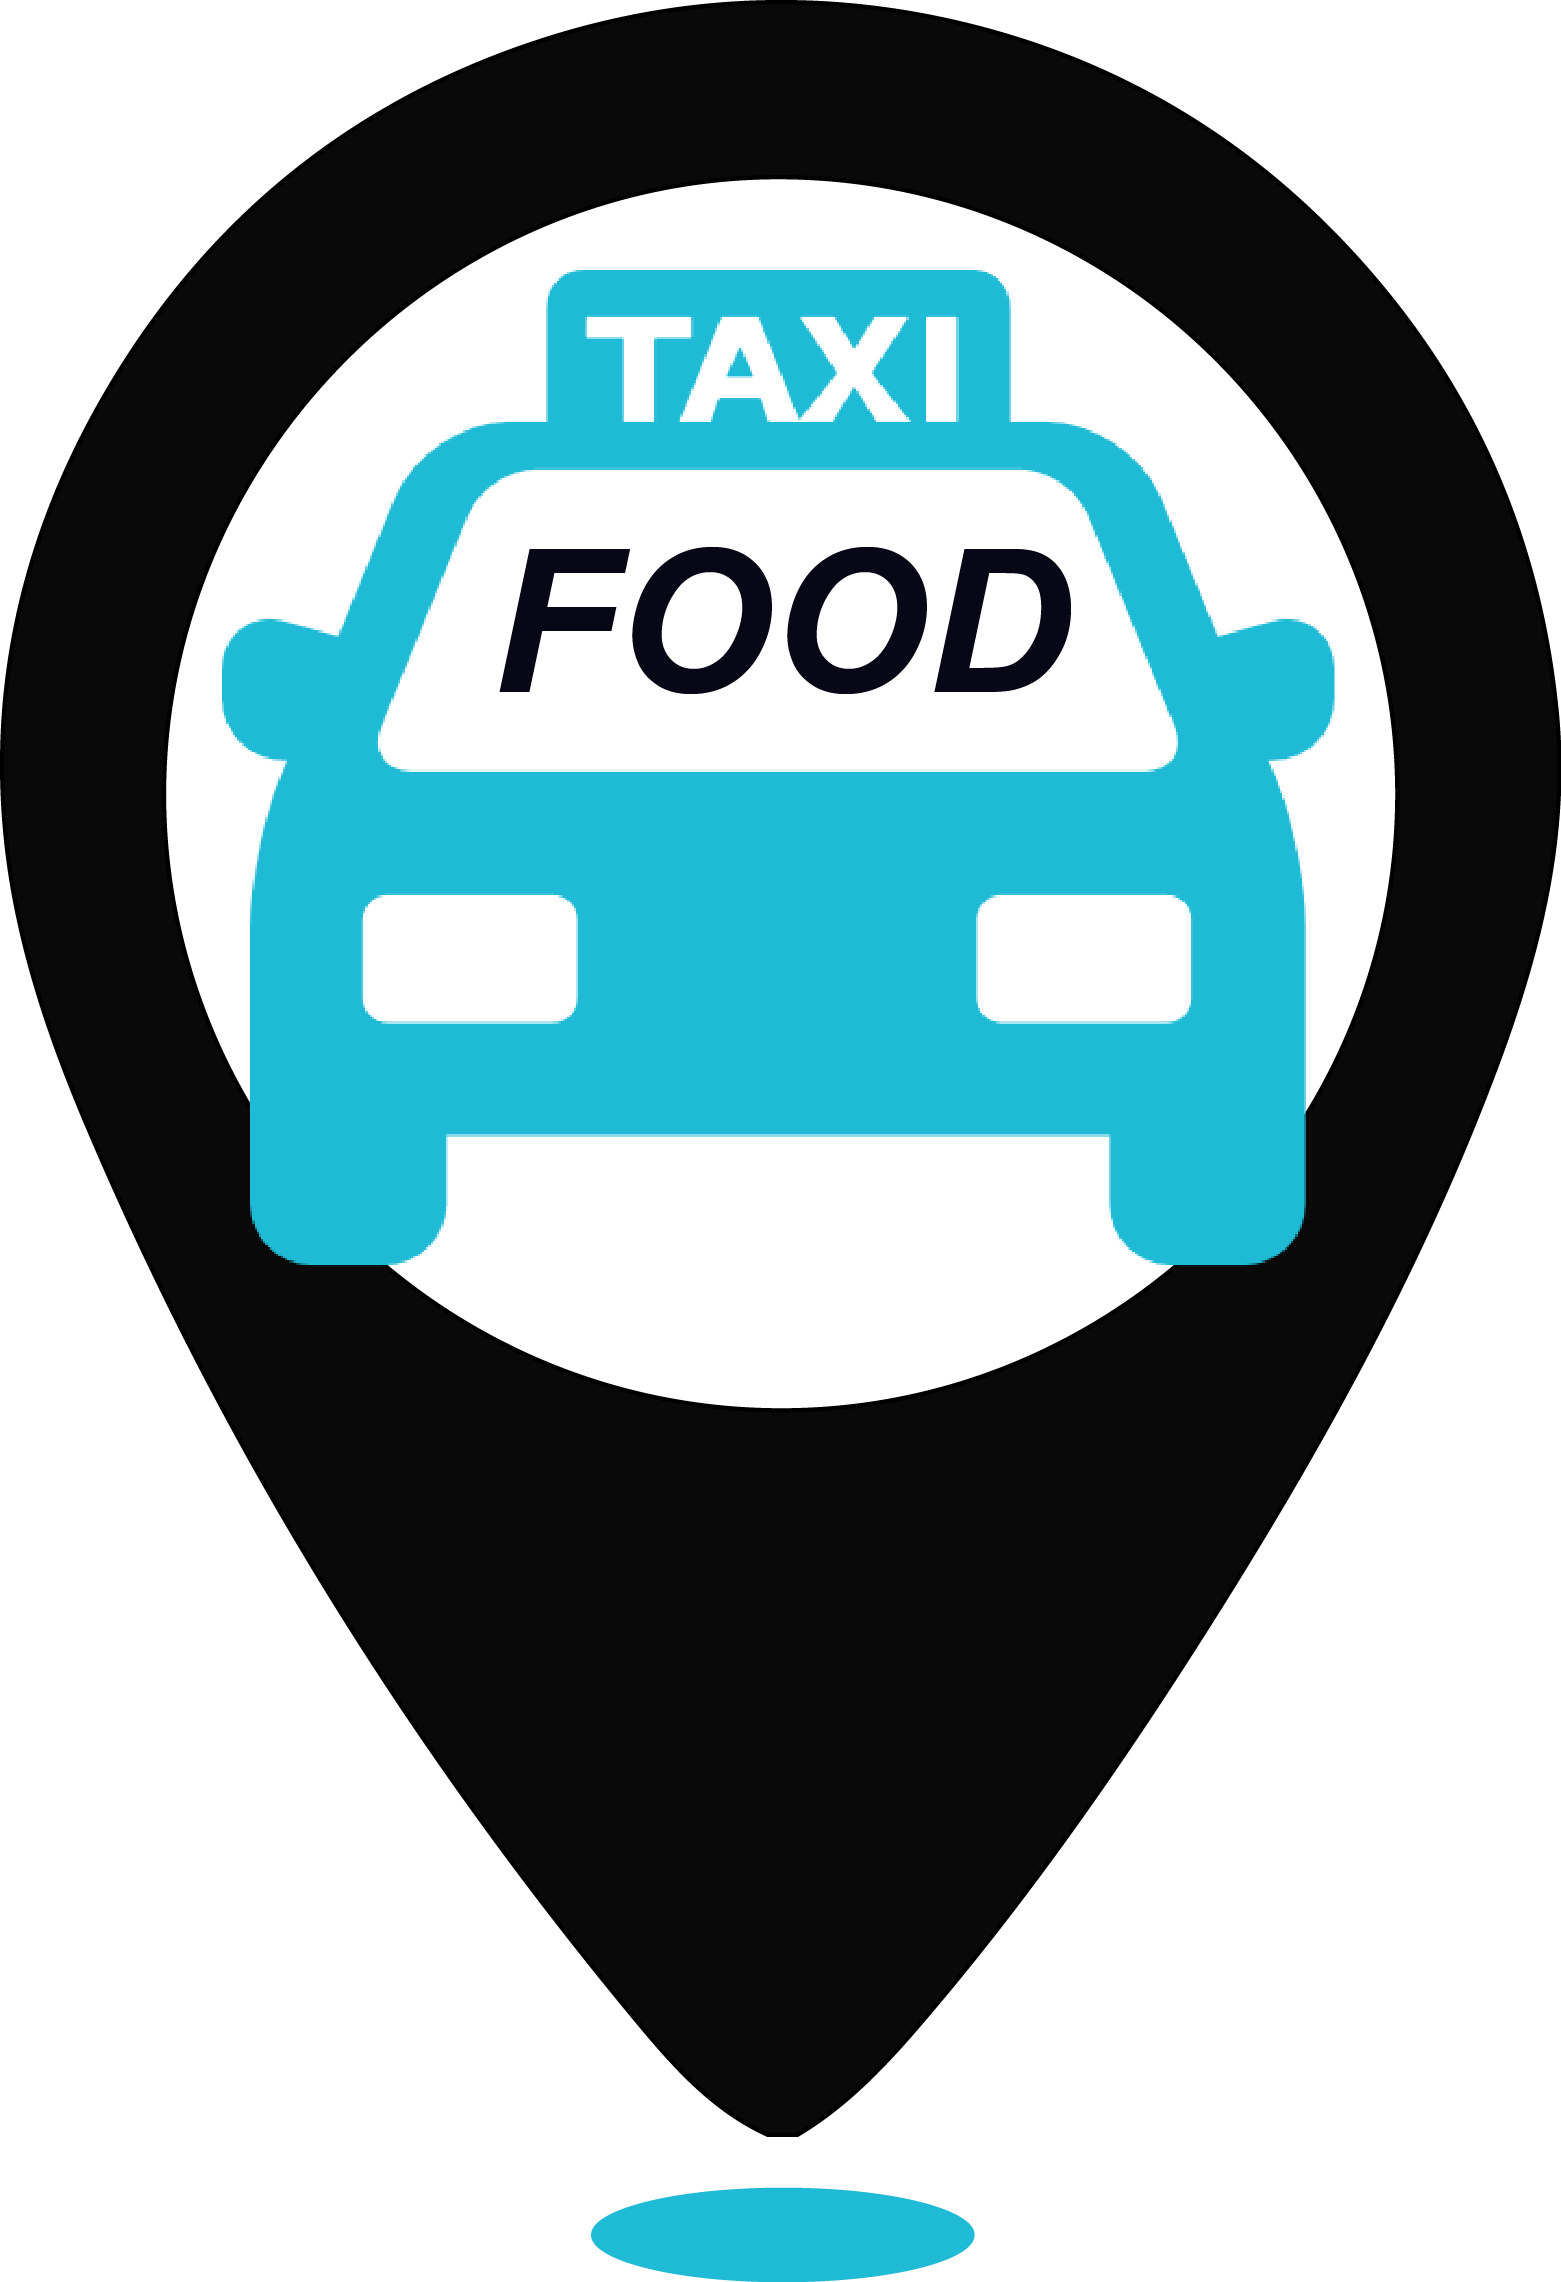 Логотип такси. Фуд такси. Taxi food логотип. Такси еда СПБ. Фуд такси отзывы